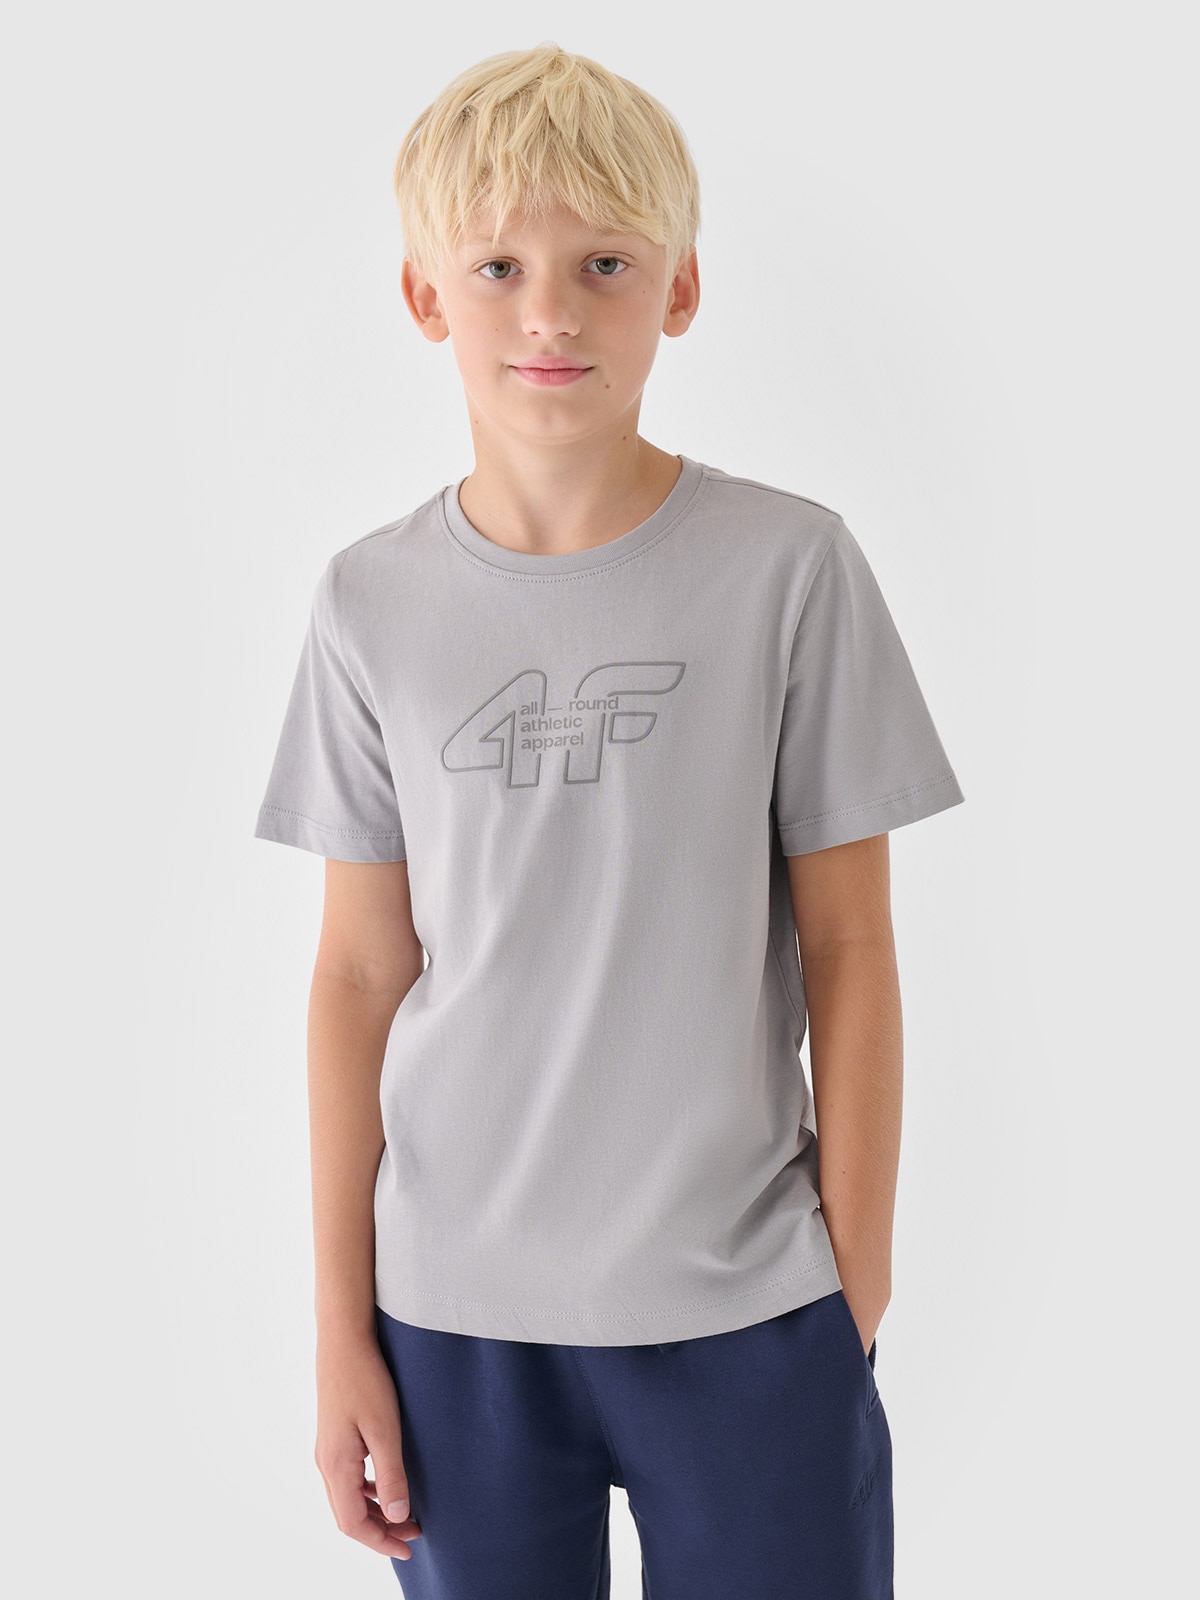 Chlapecké tričko s potiskem - šedé